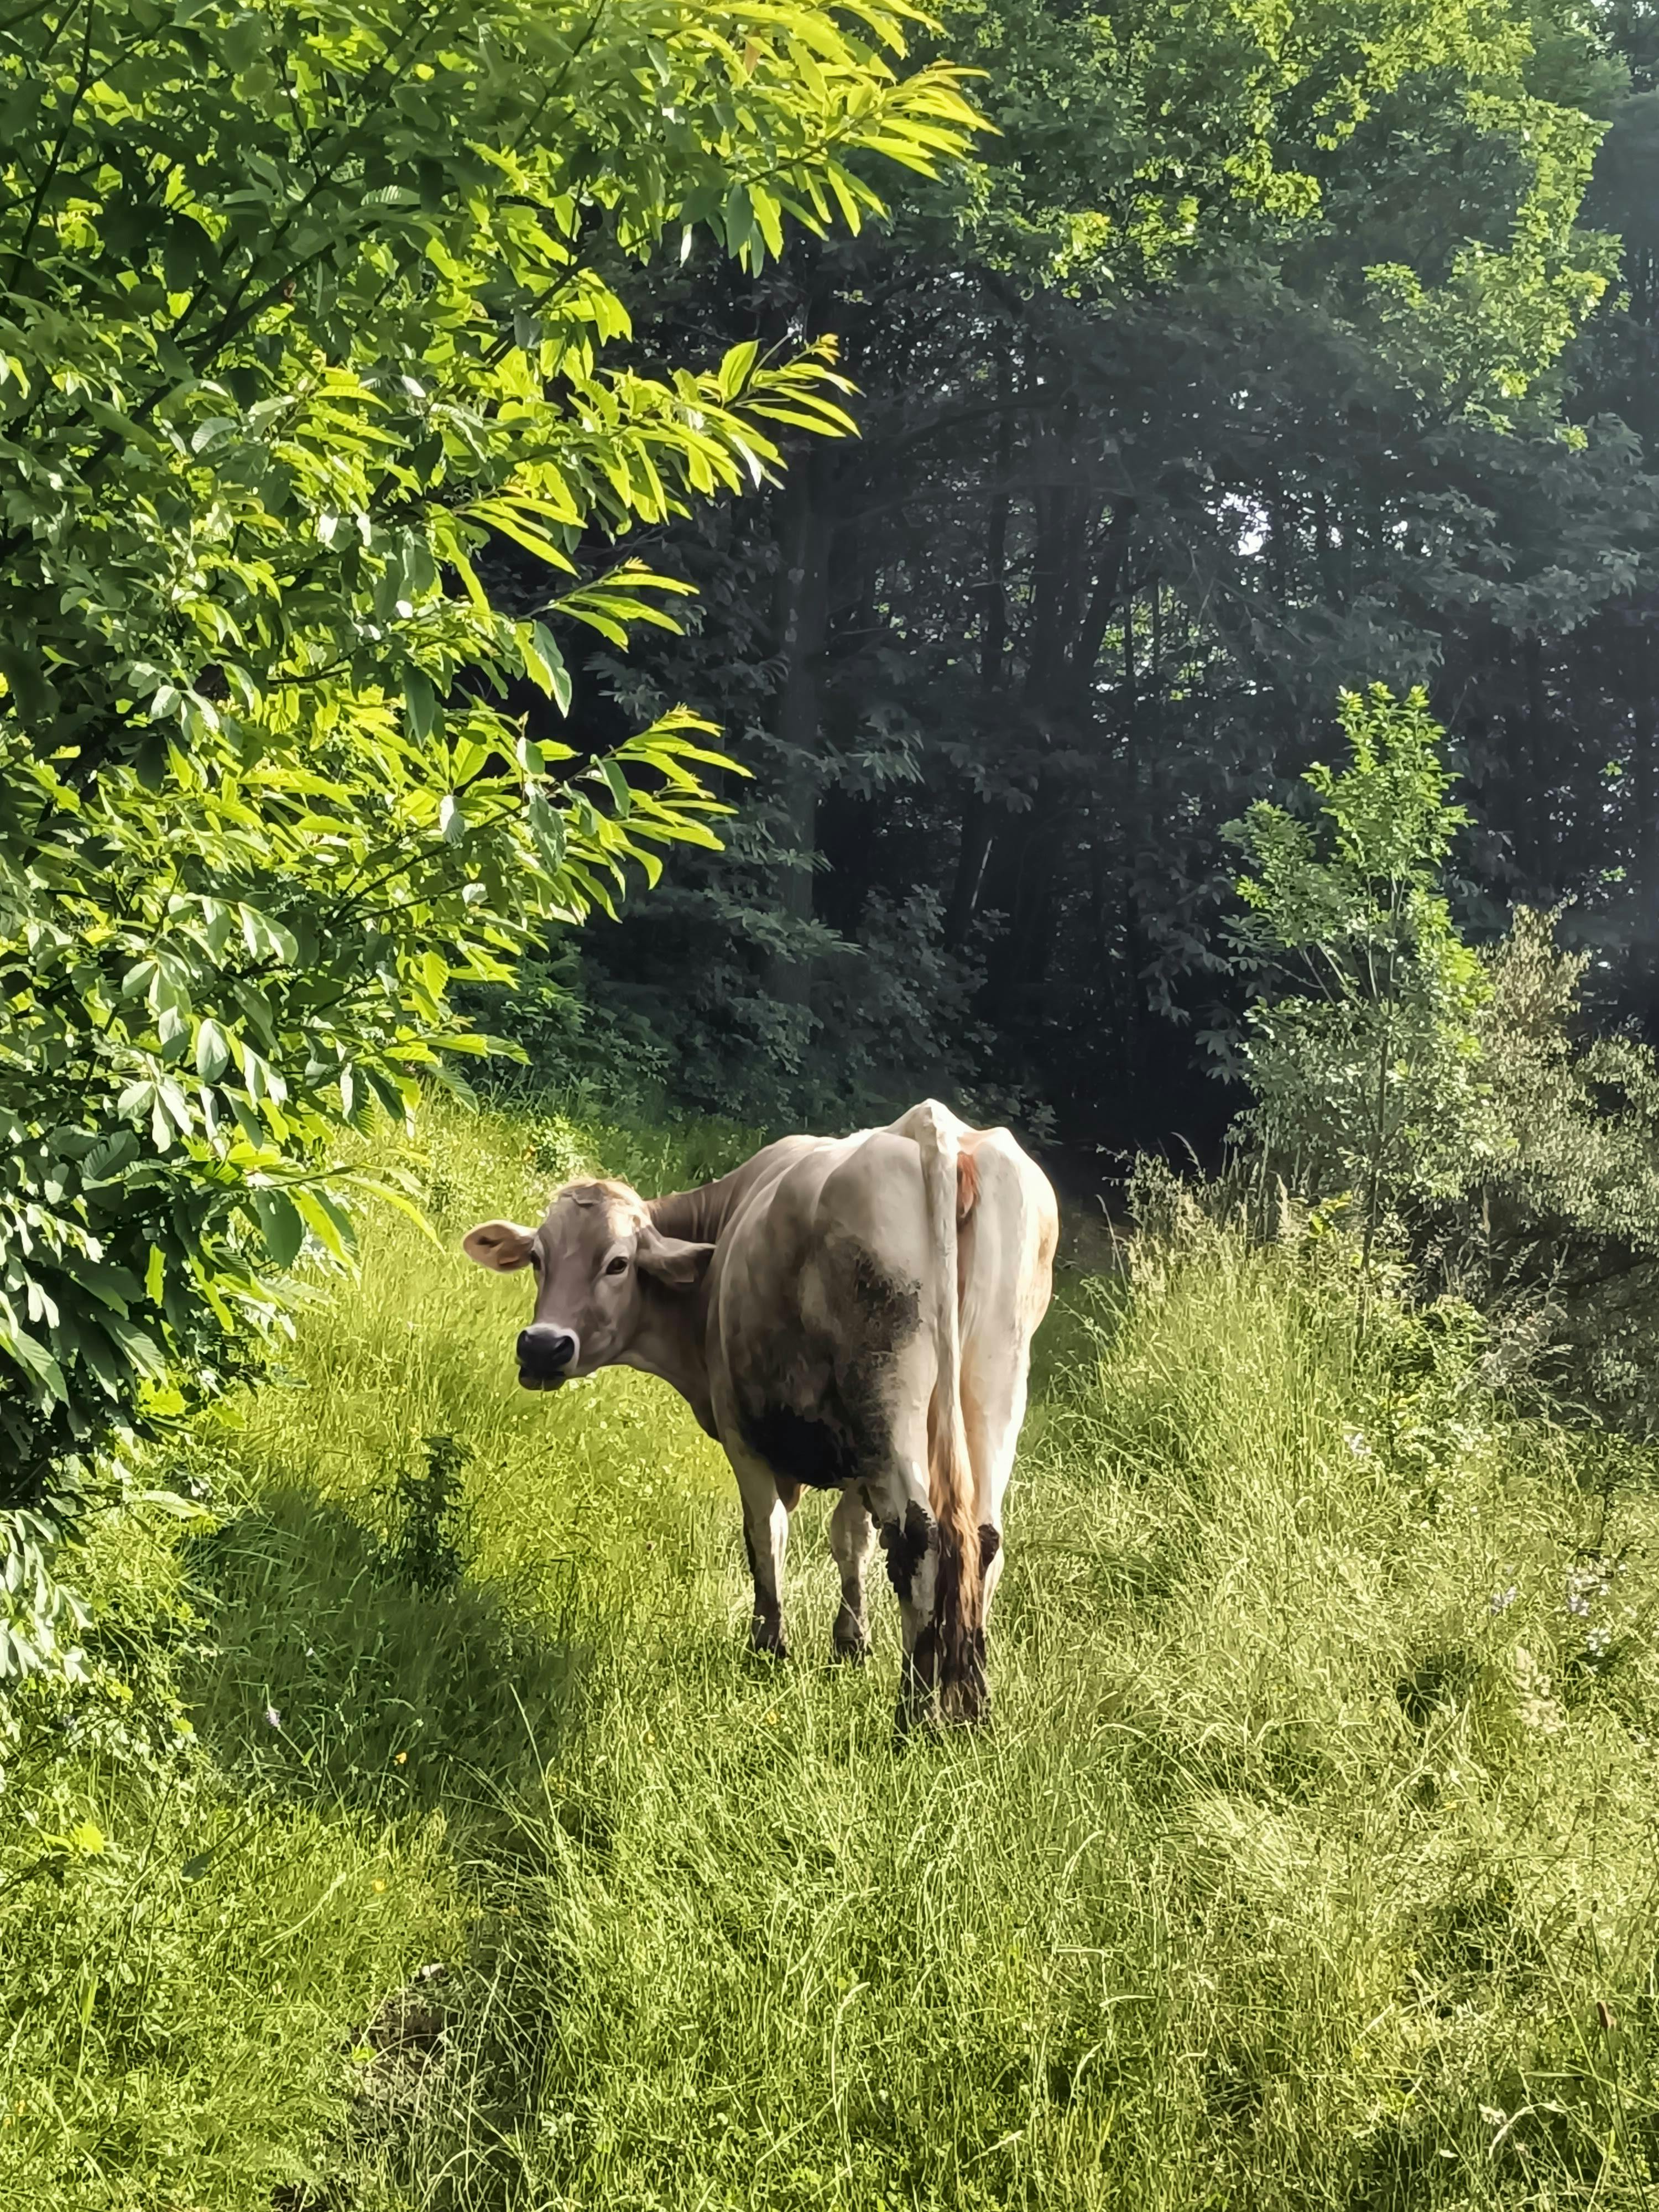 a cow barricading the path